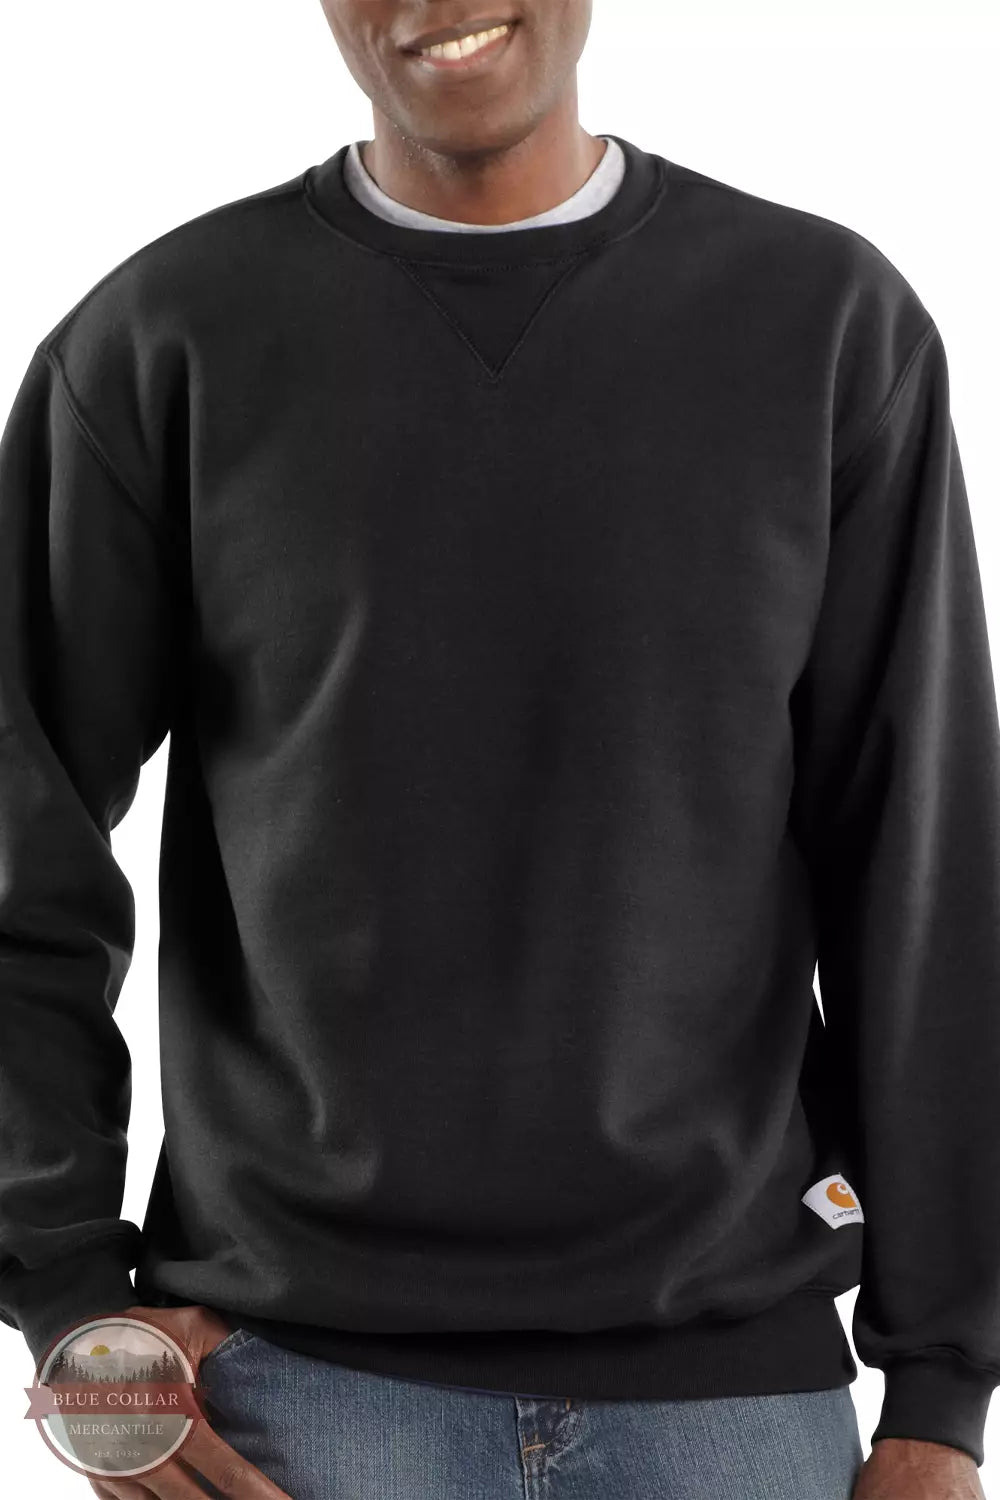 Carhartt K124 Varsity Crewneck Sweatshirt Black Front View